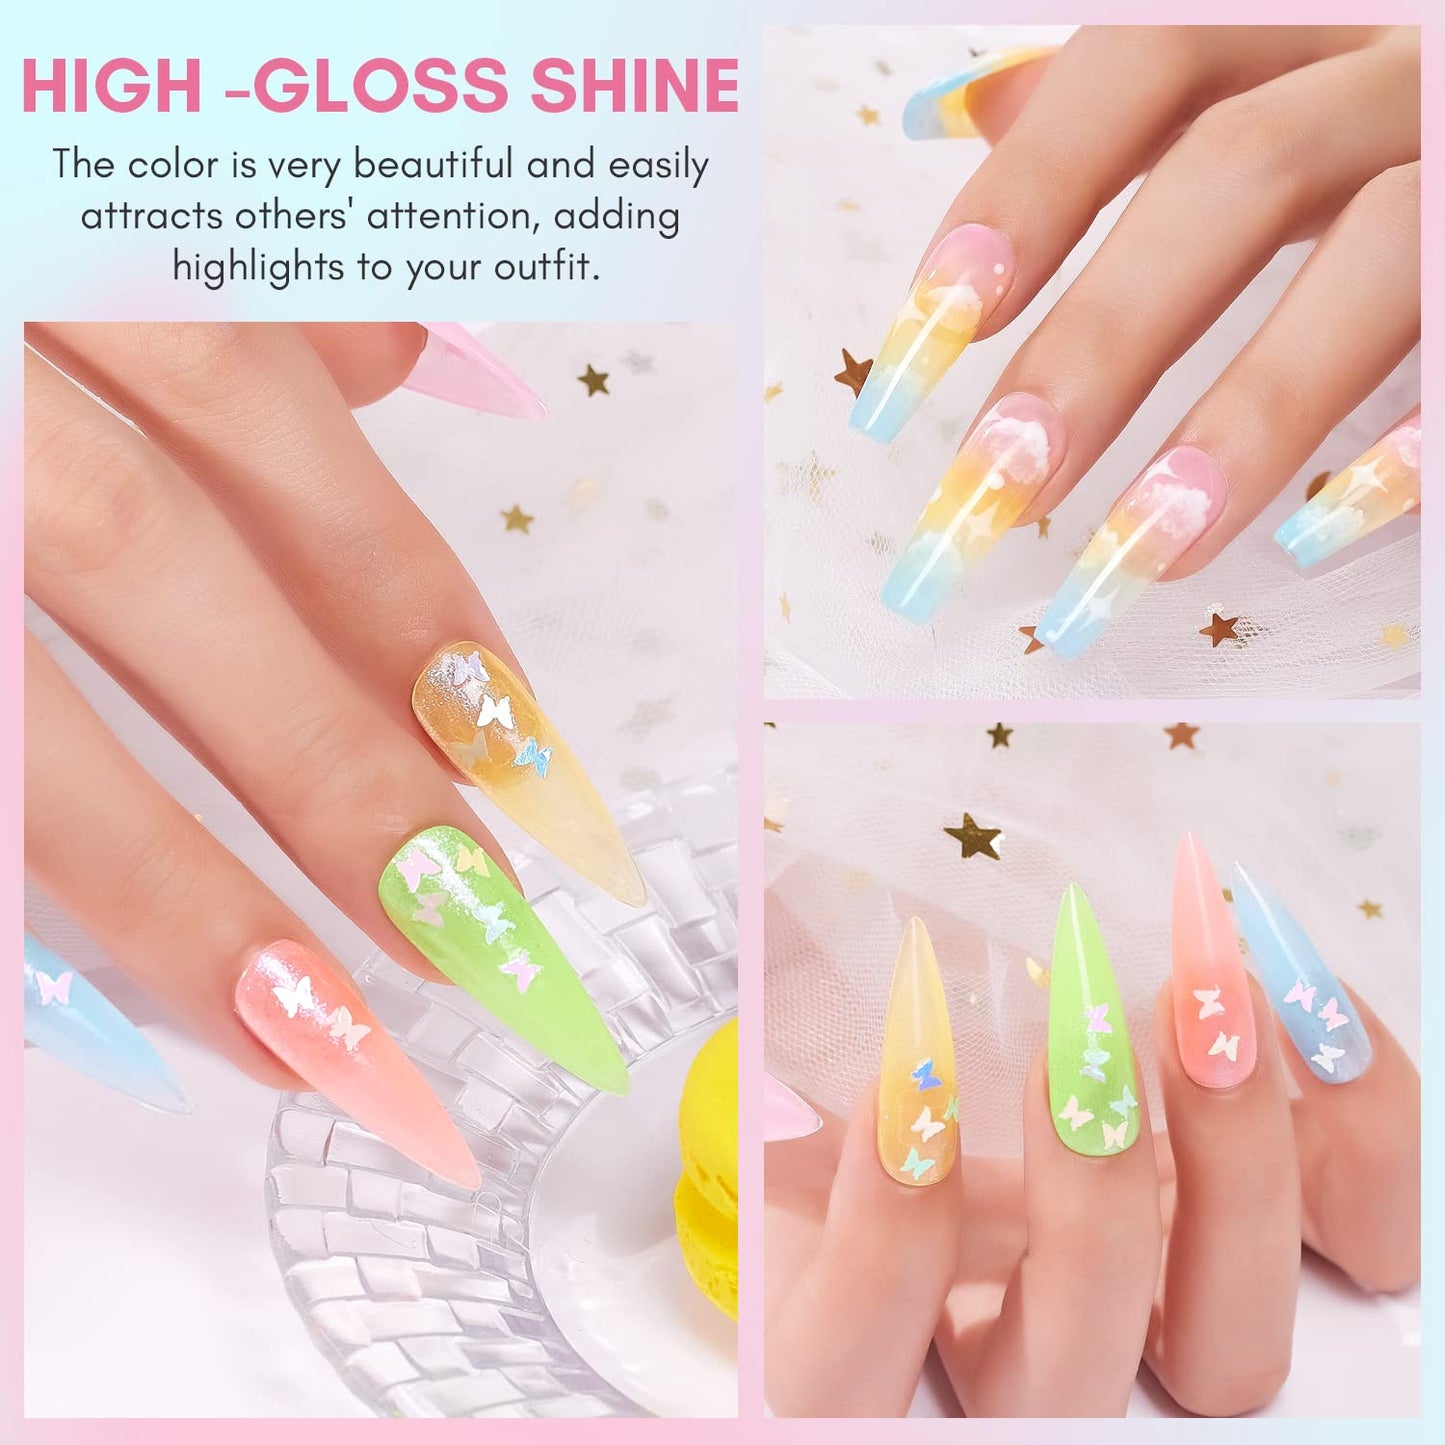 Makartt Jelly Gel Nail Polish Set - 6 Colors Rainbow Transparent Gel Nail Polish Spring Summer